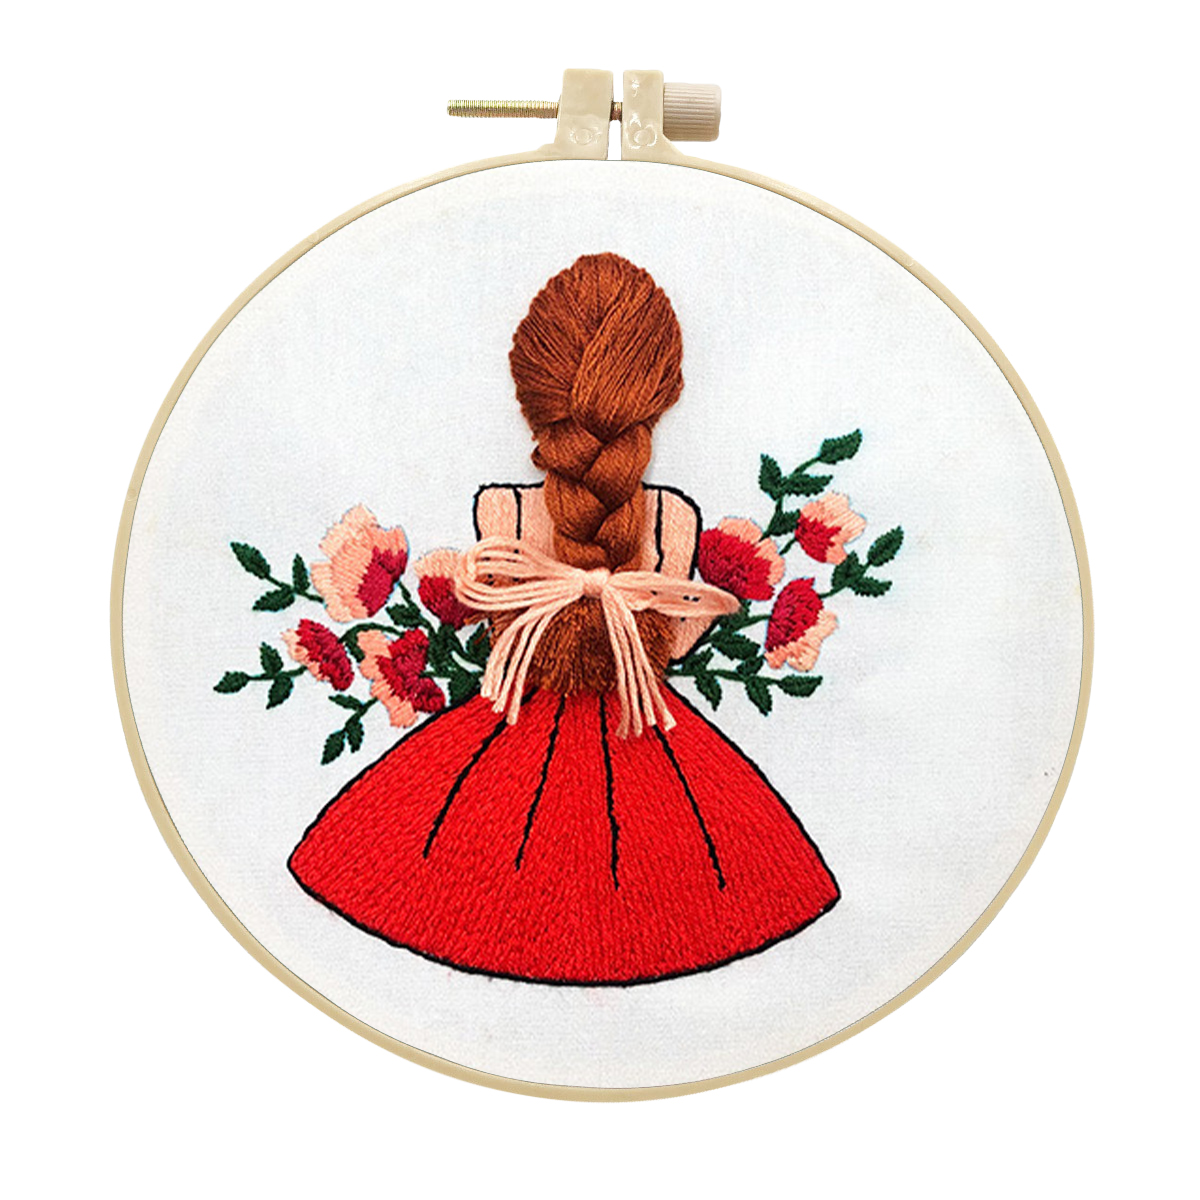 Handmade Embroidery Kit Cross stitch kit for Adult Beginner - Red Dress Girl Pattern